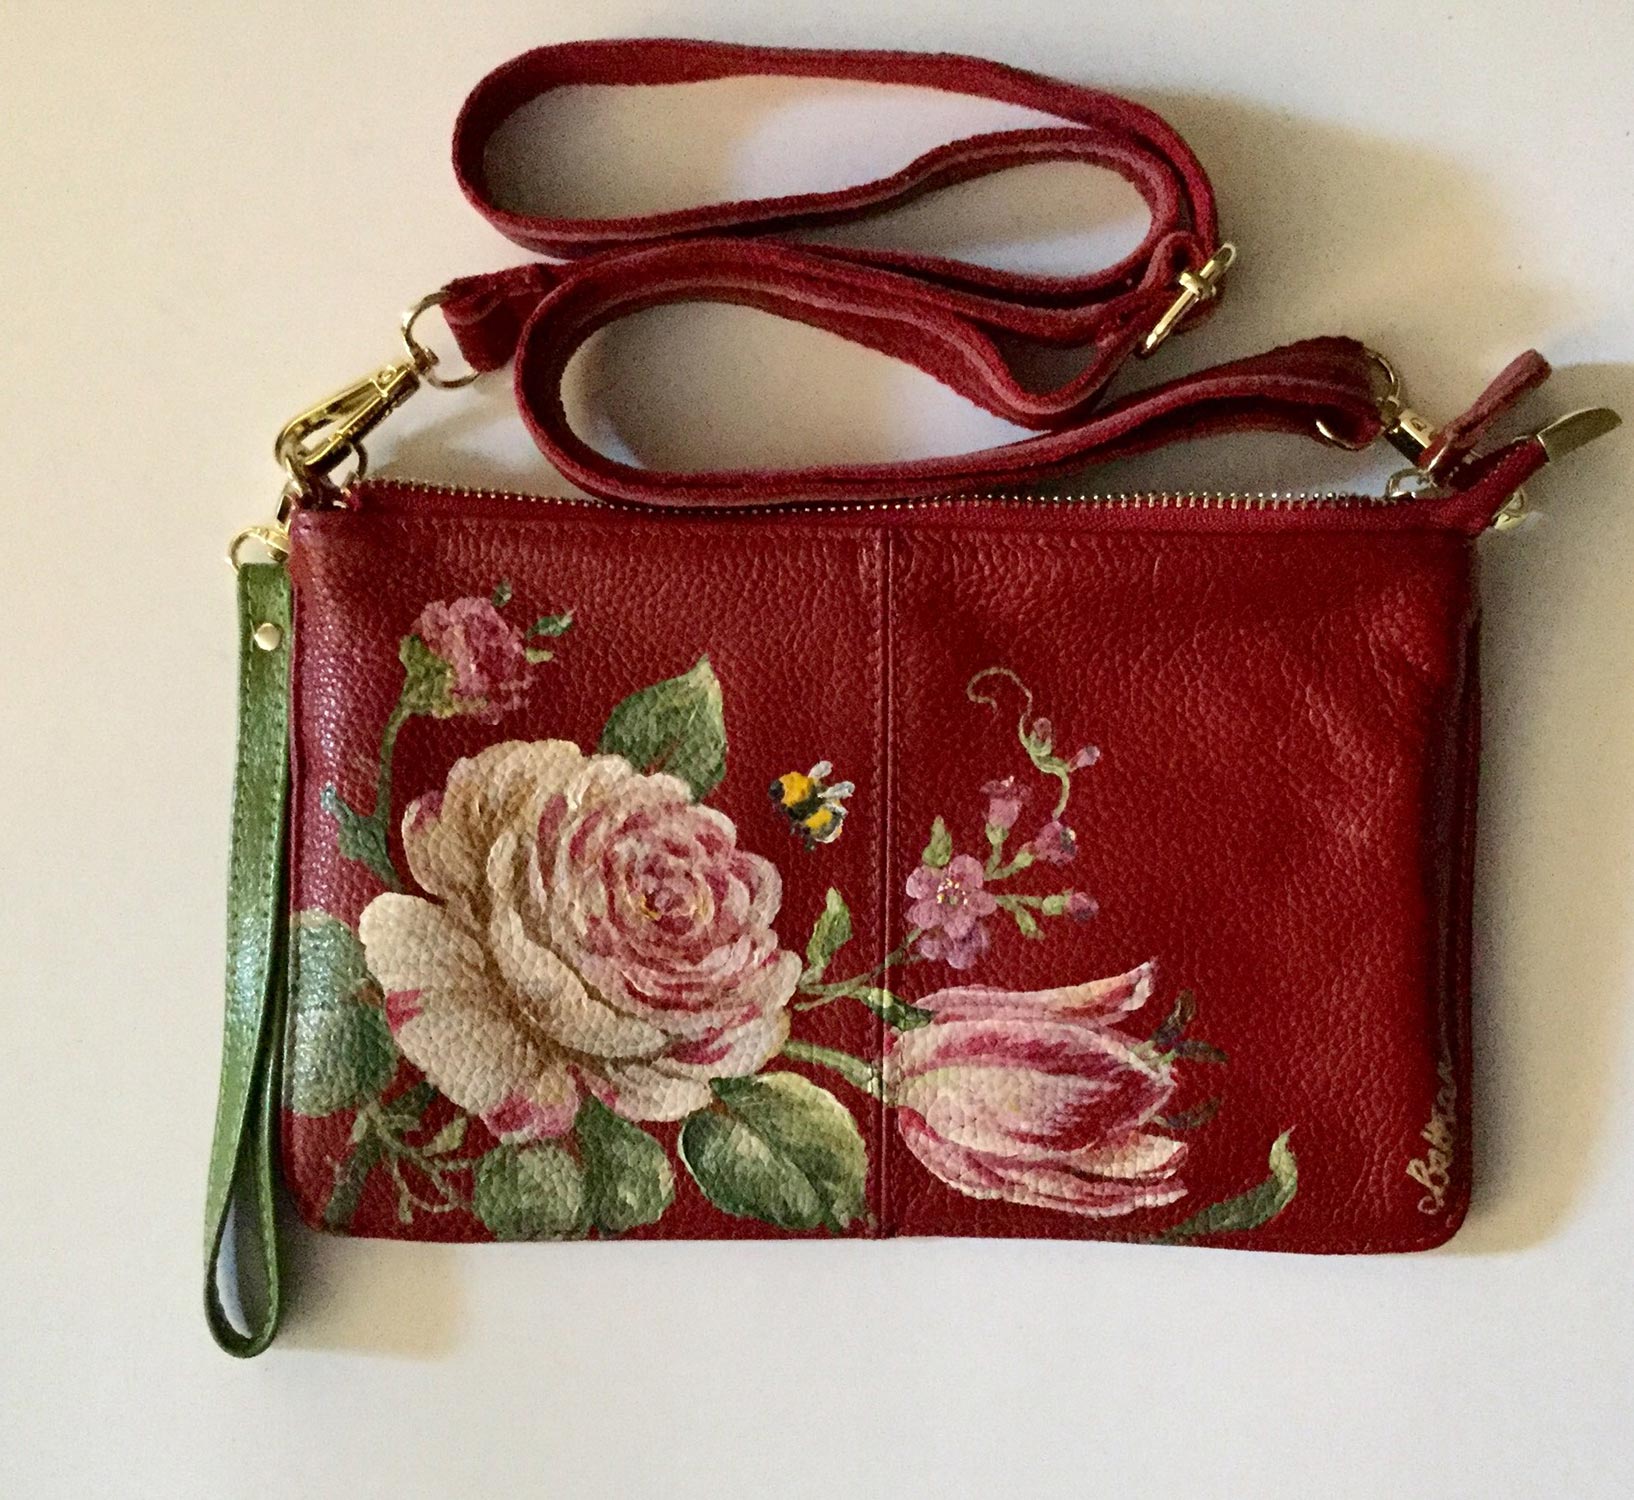 Handcrafted Palm Handbag Purse with Unique Flower Designs